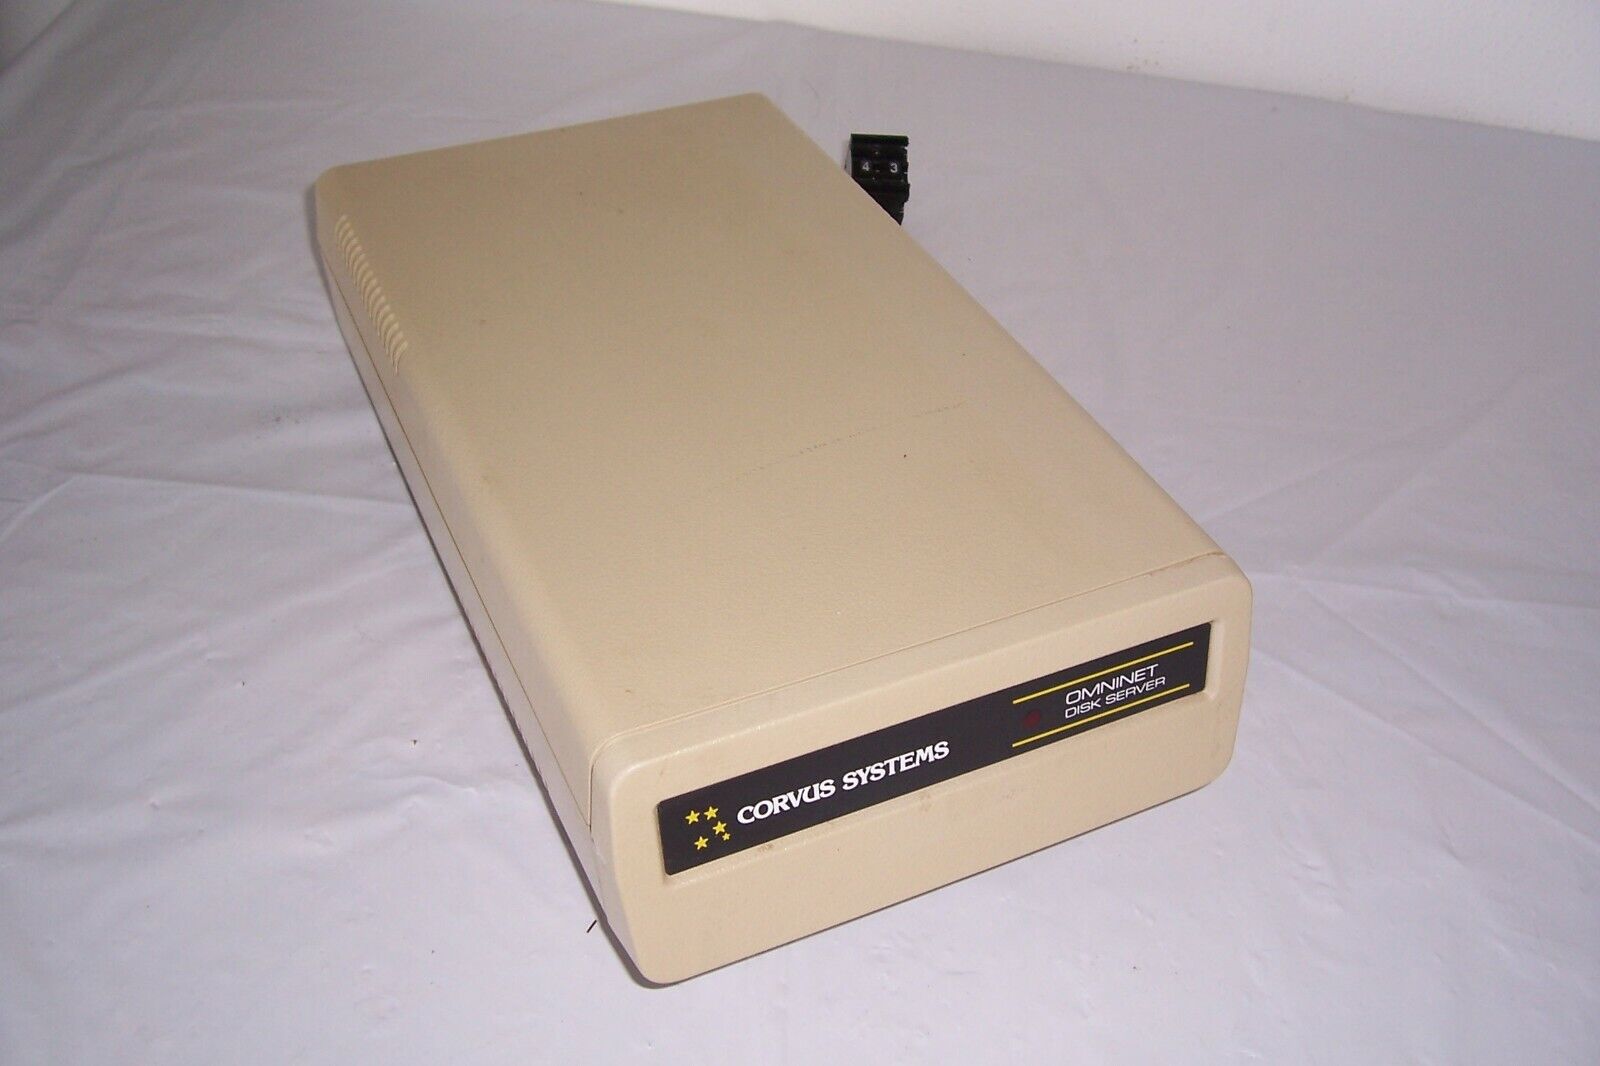 Corvus Omninet disk server